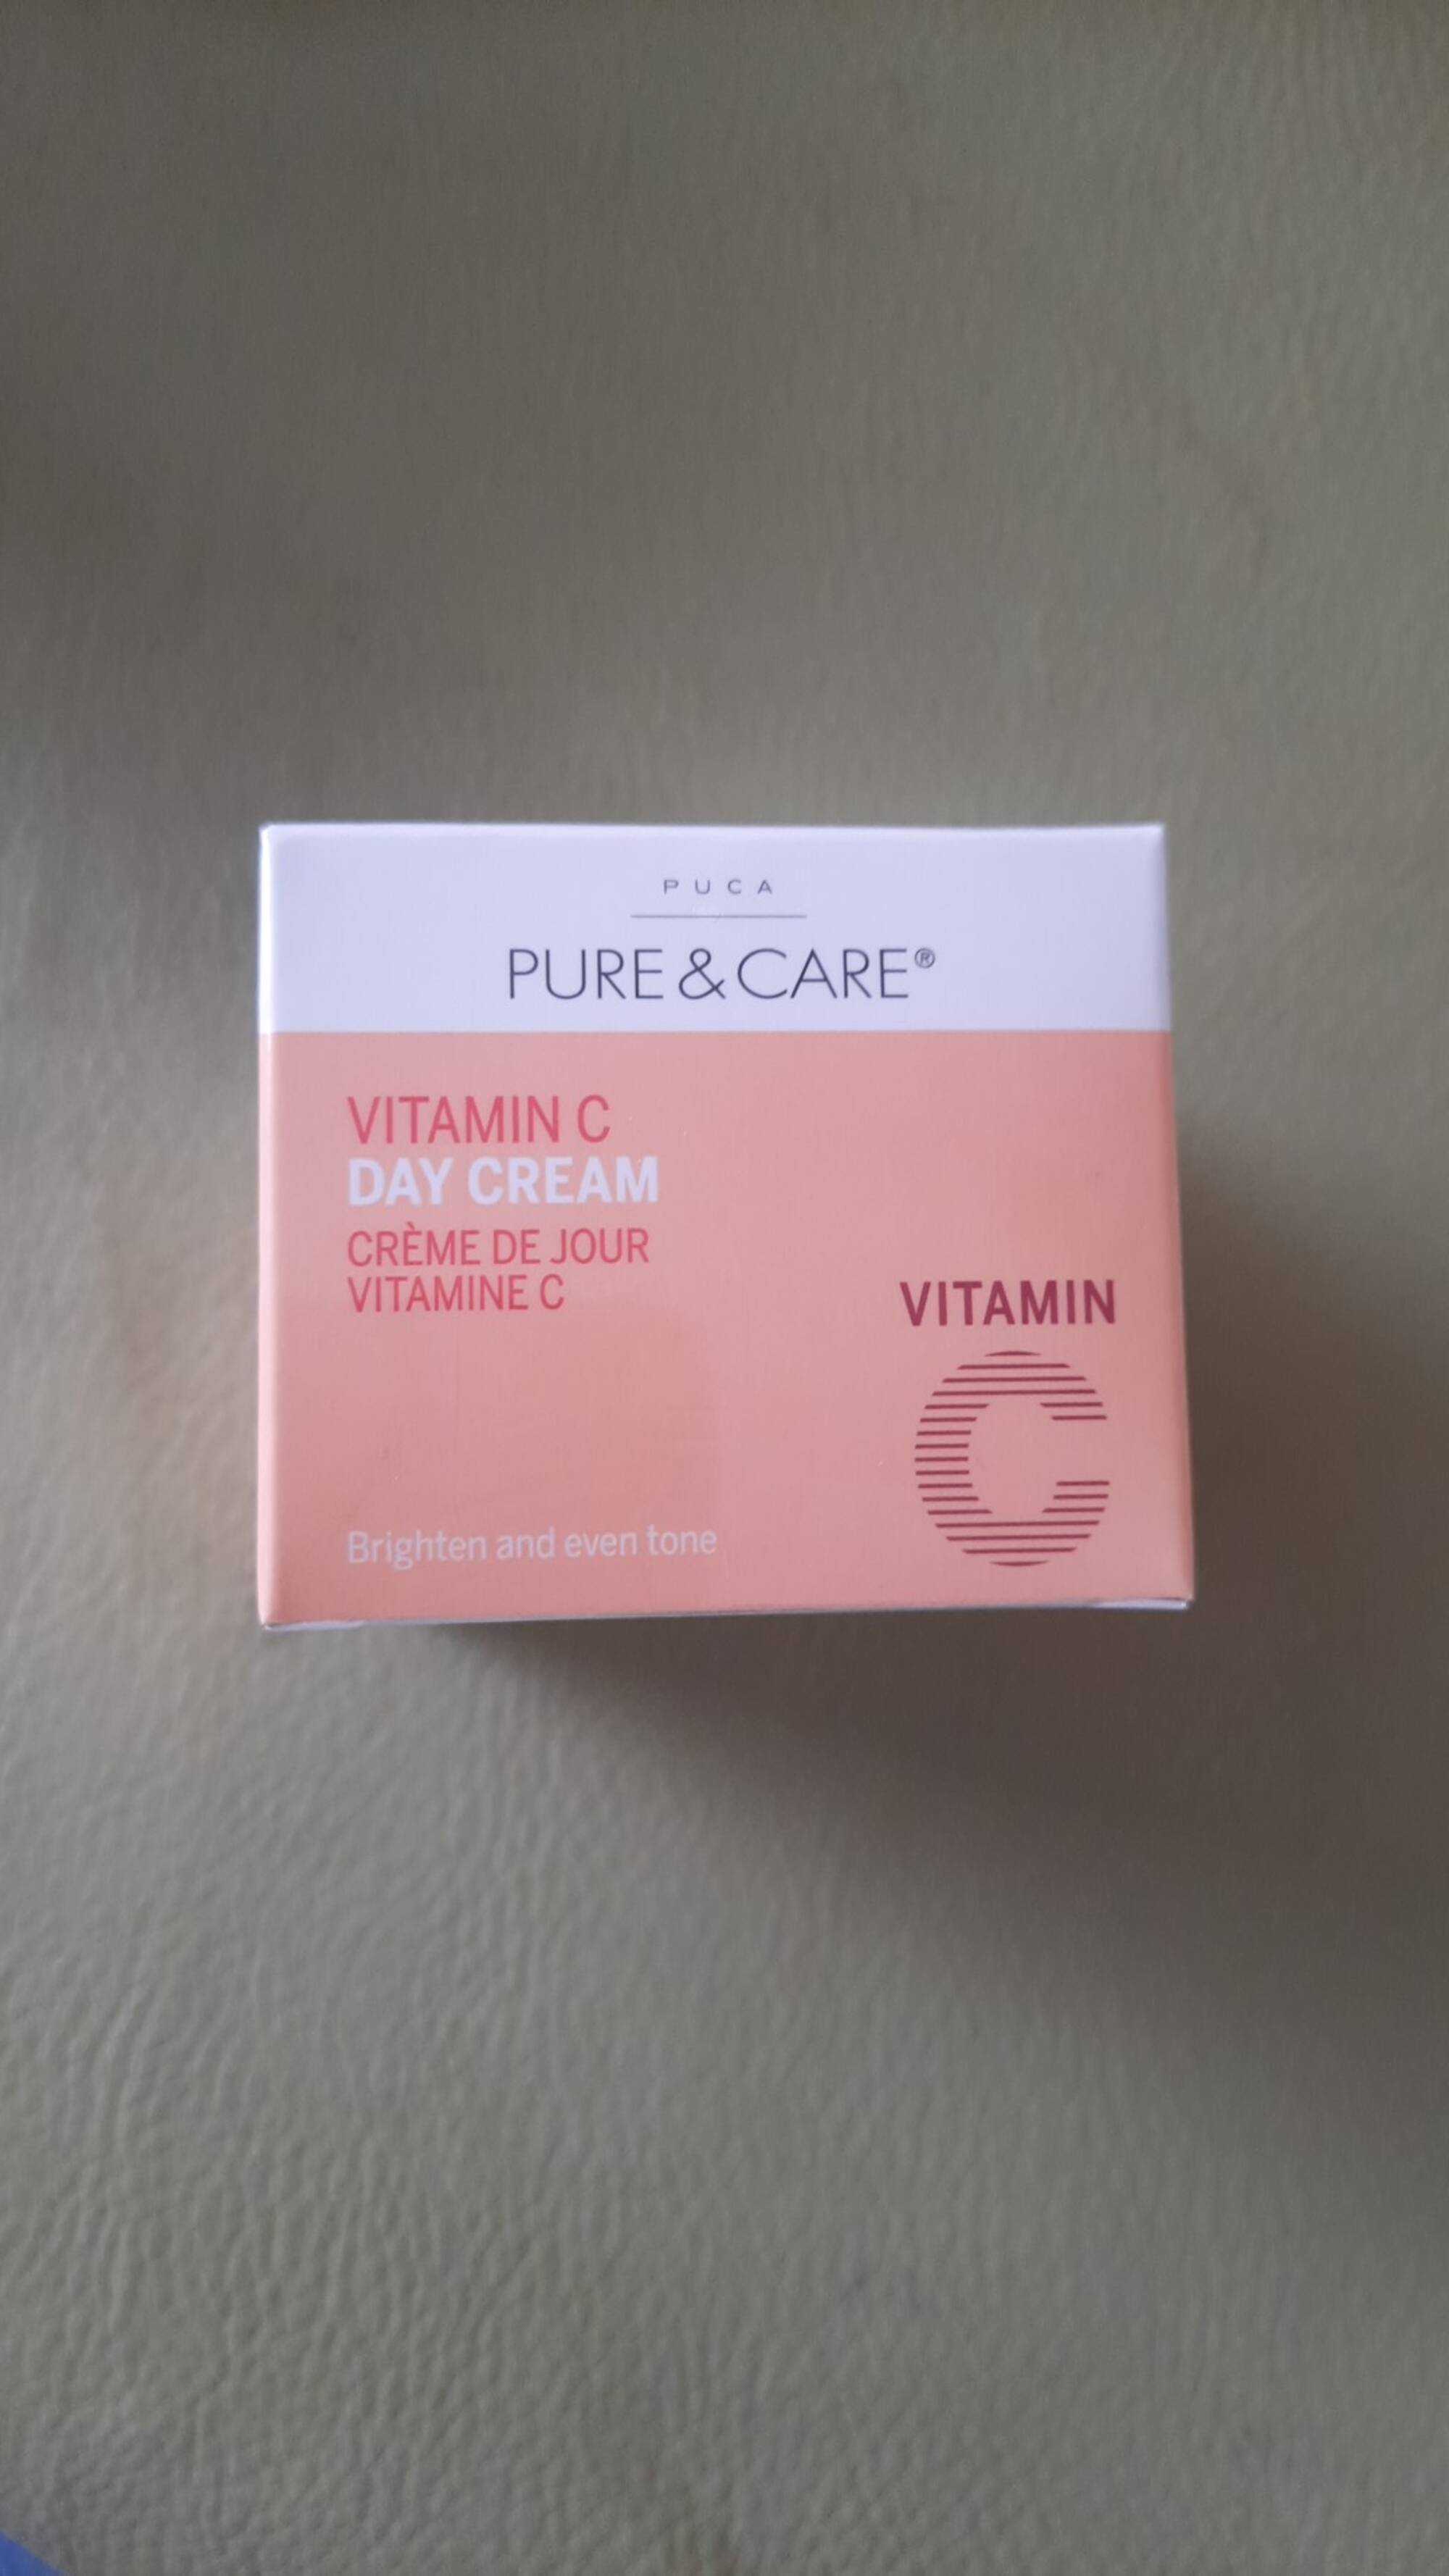 PURE & CARE - Puca - Crème de jour vitamine C